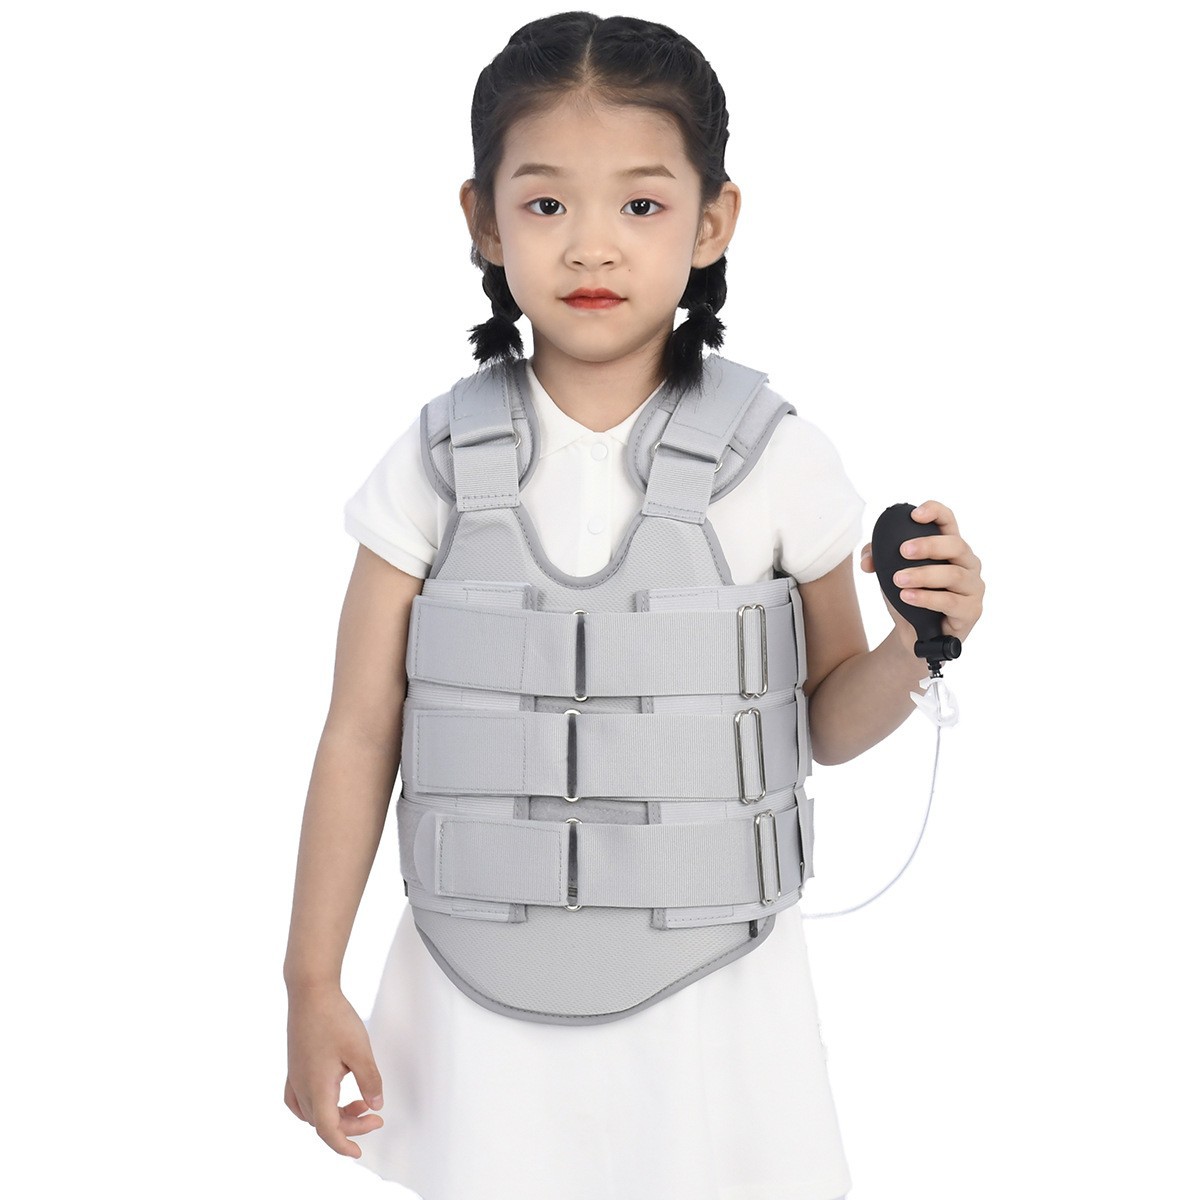 GX Dynasty Medical K-014 Παιδικός θωρακικός νάρθηκας στερέωσης με αερόσακο